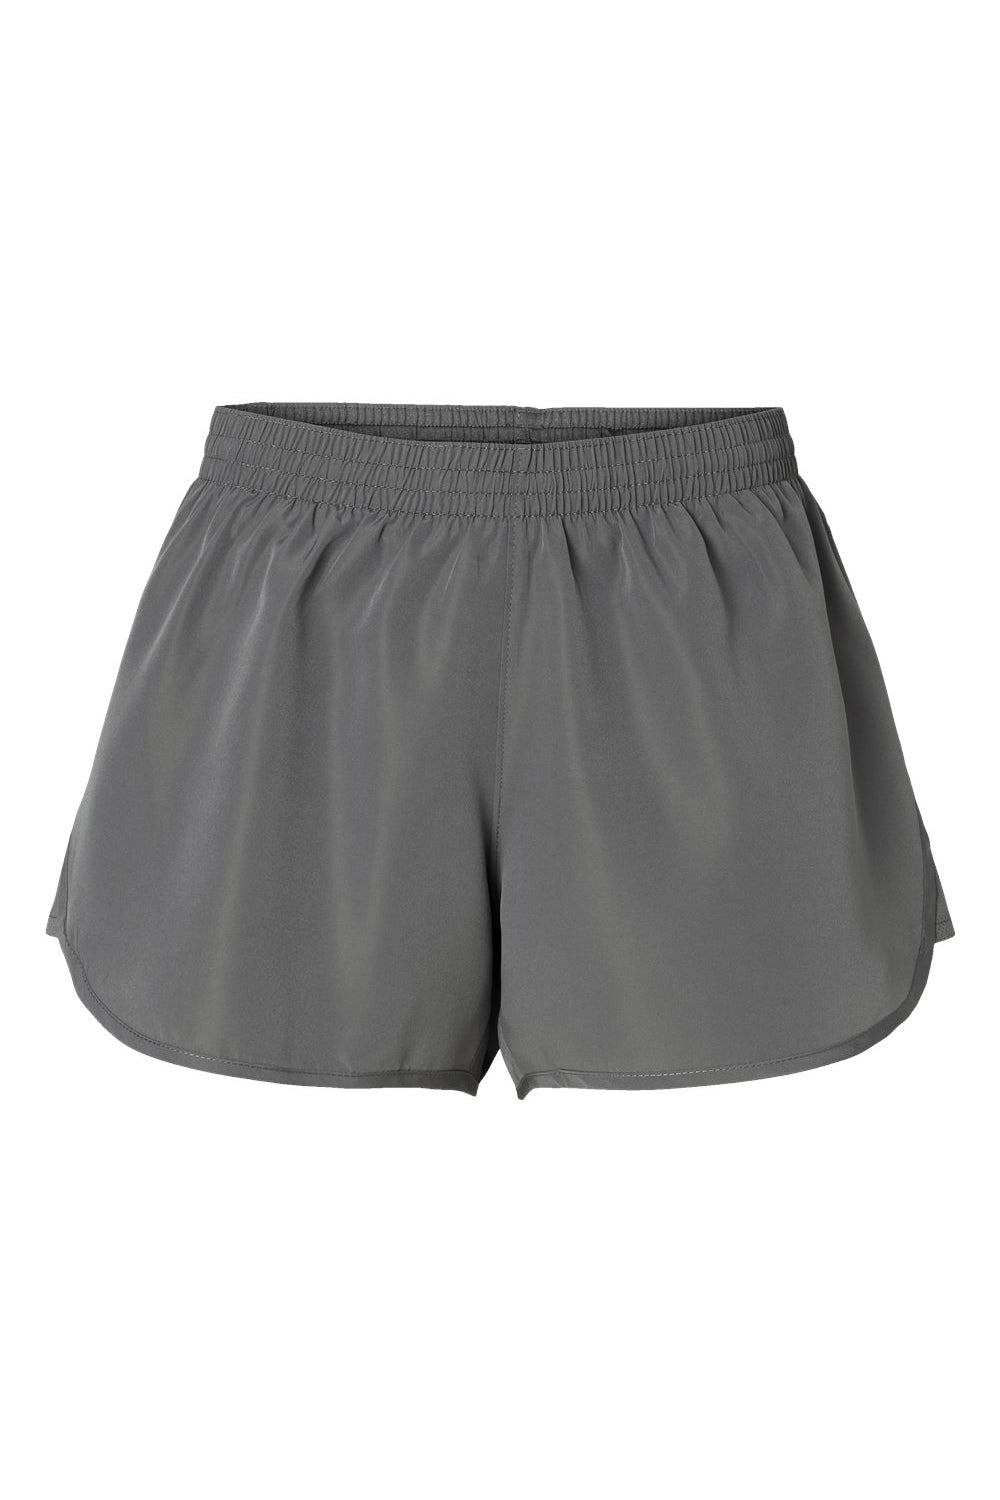 Augusta Sportswear 2430 Womens Wayfarer Moisture Wicking Shorts w/ Internal Pocket Graphite Grey Flat Front